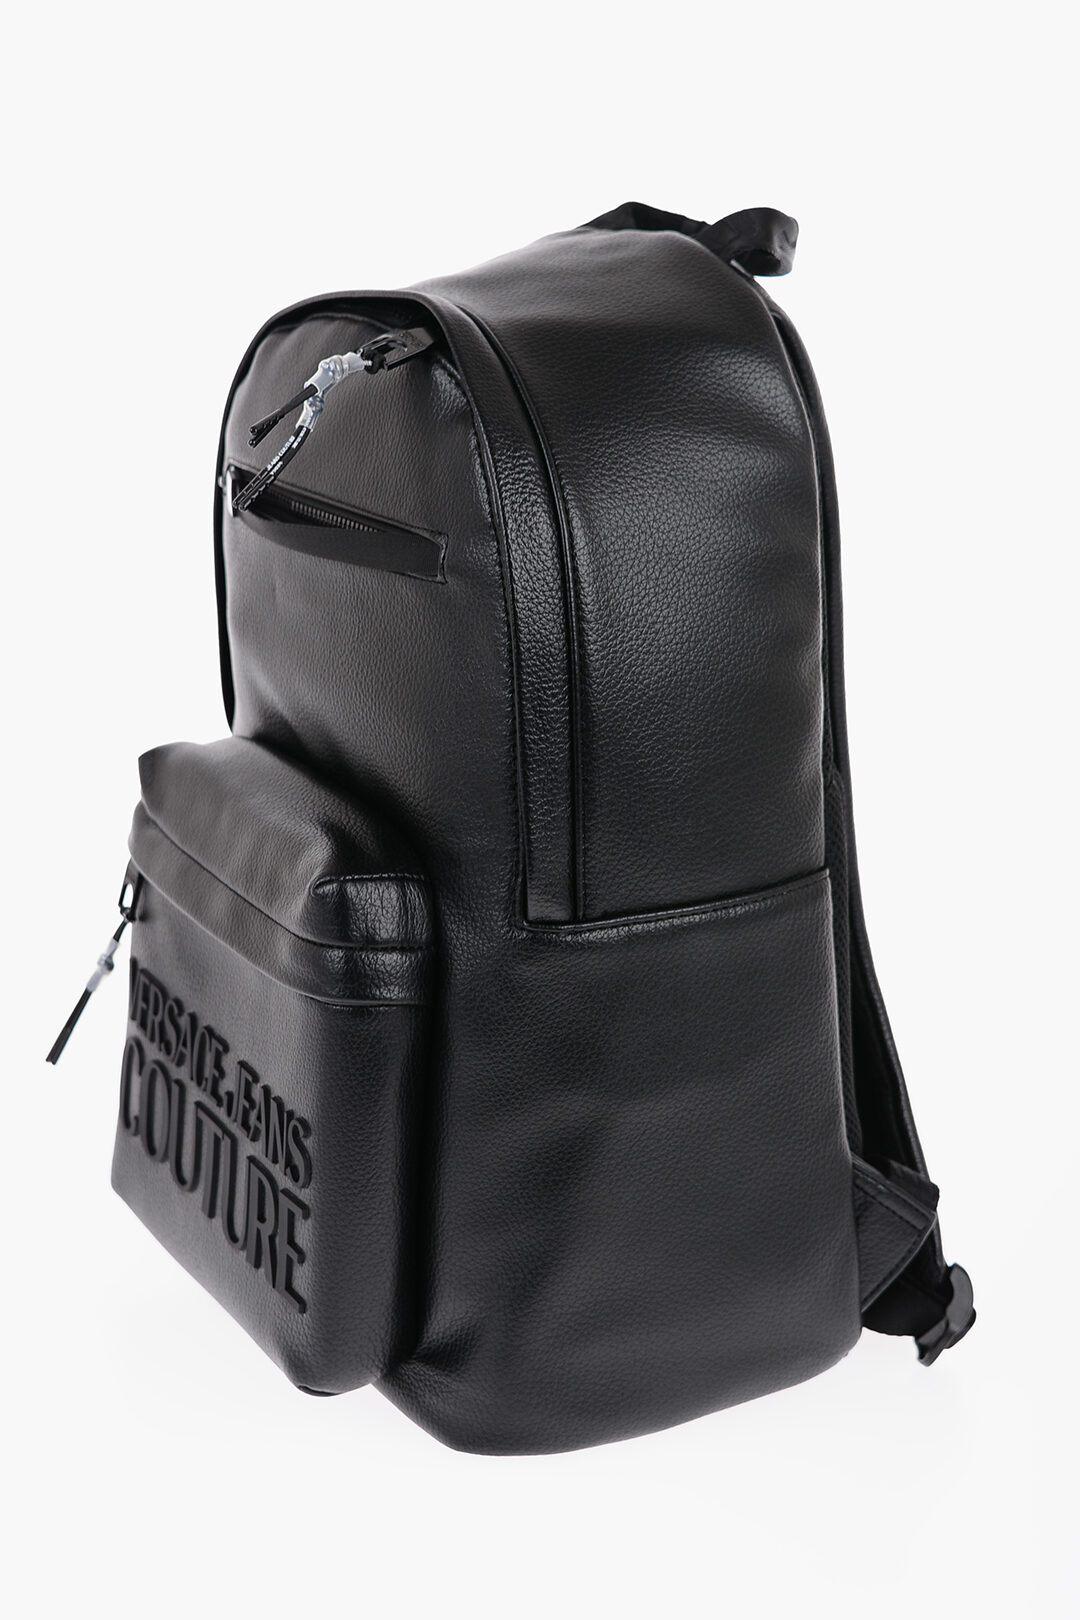 I IHAYNER Mini Backpack for Girls Gift, Backpack India | Ubuy